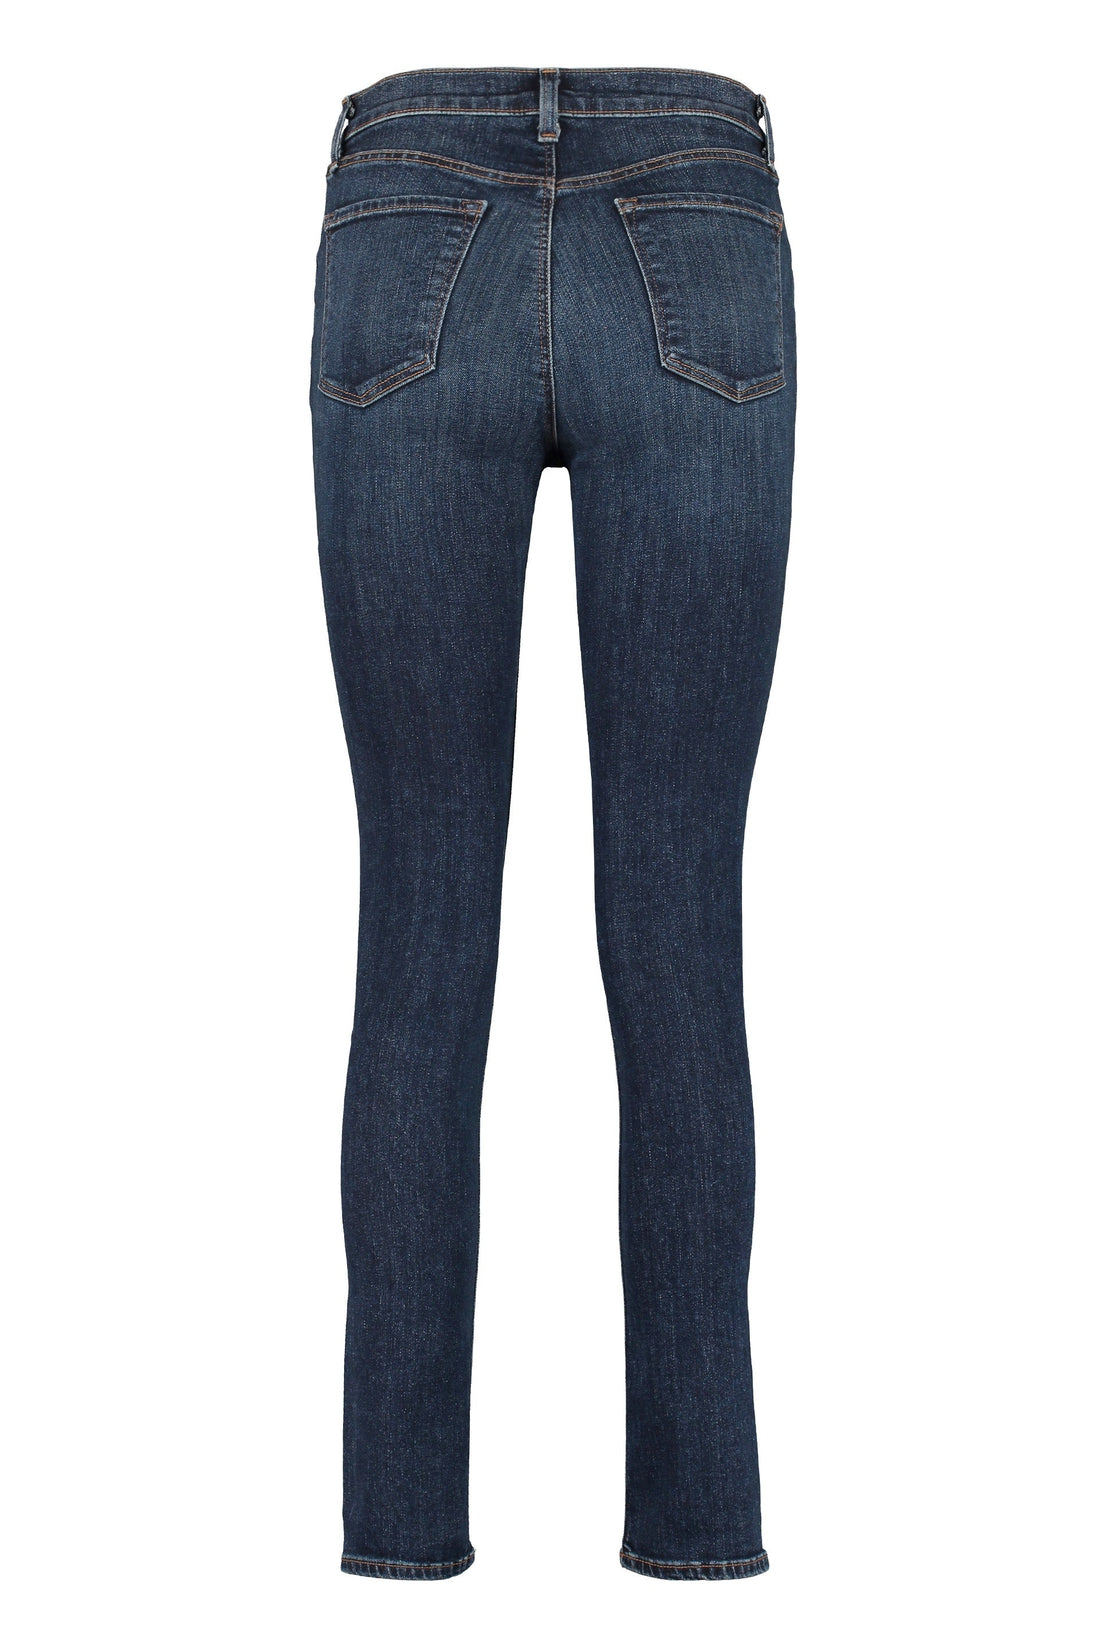 J Brand-OUTLET-SALE-Ruby 30 skinny jeans-ARCHIVIST